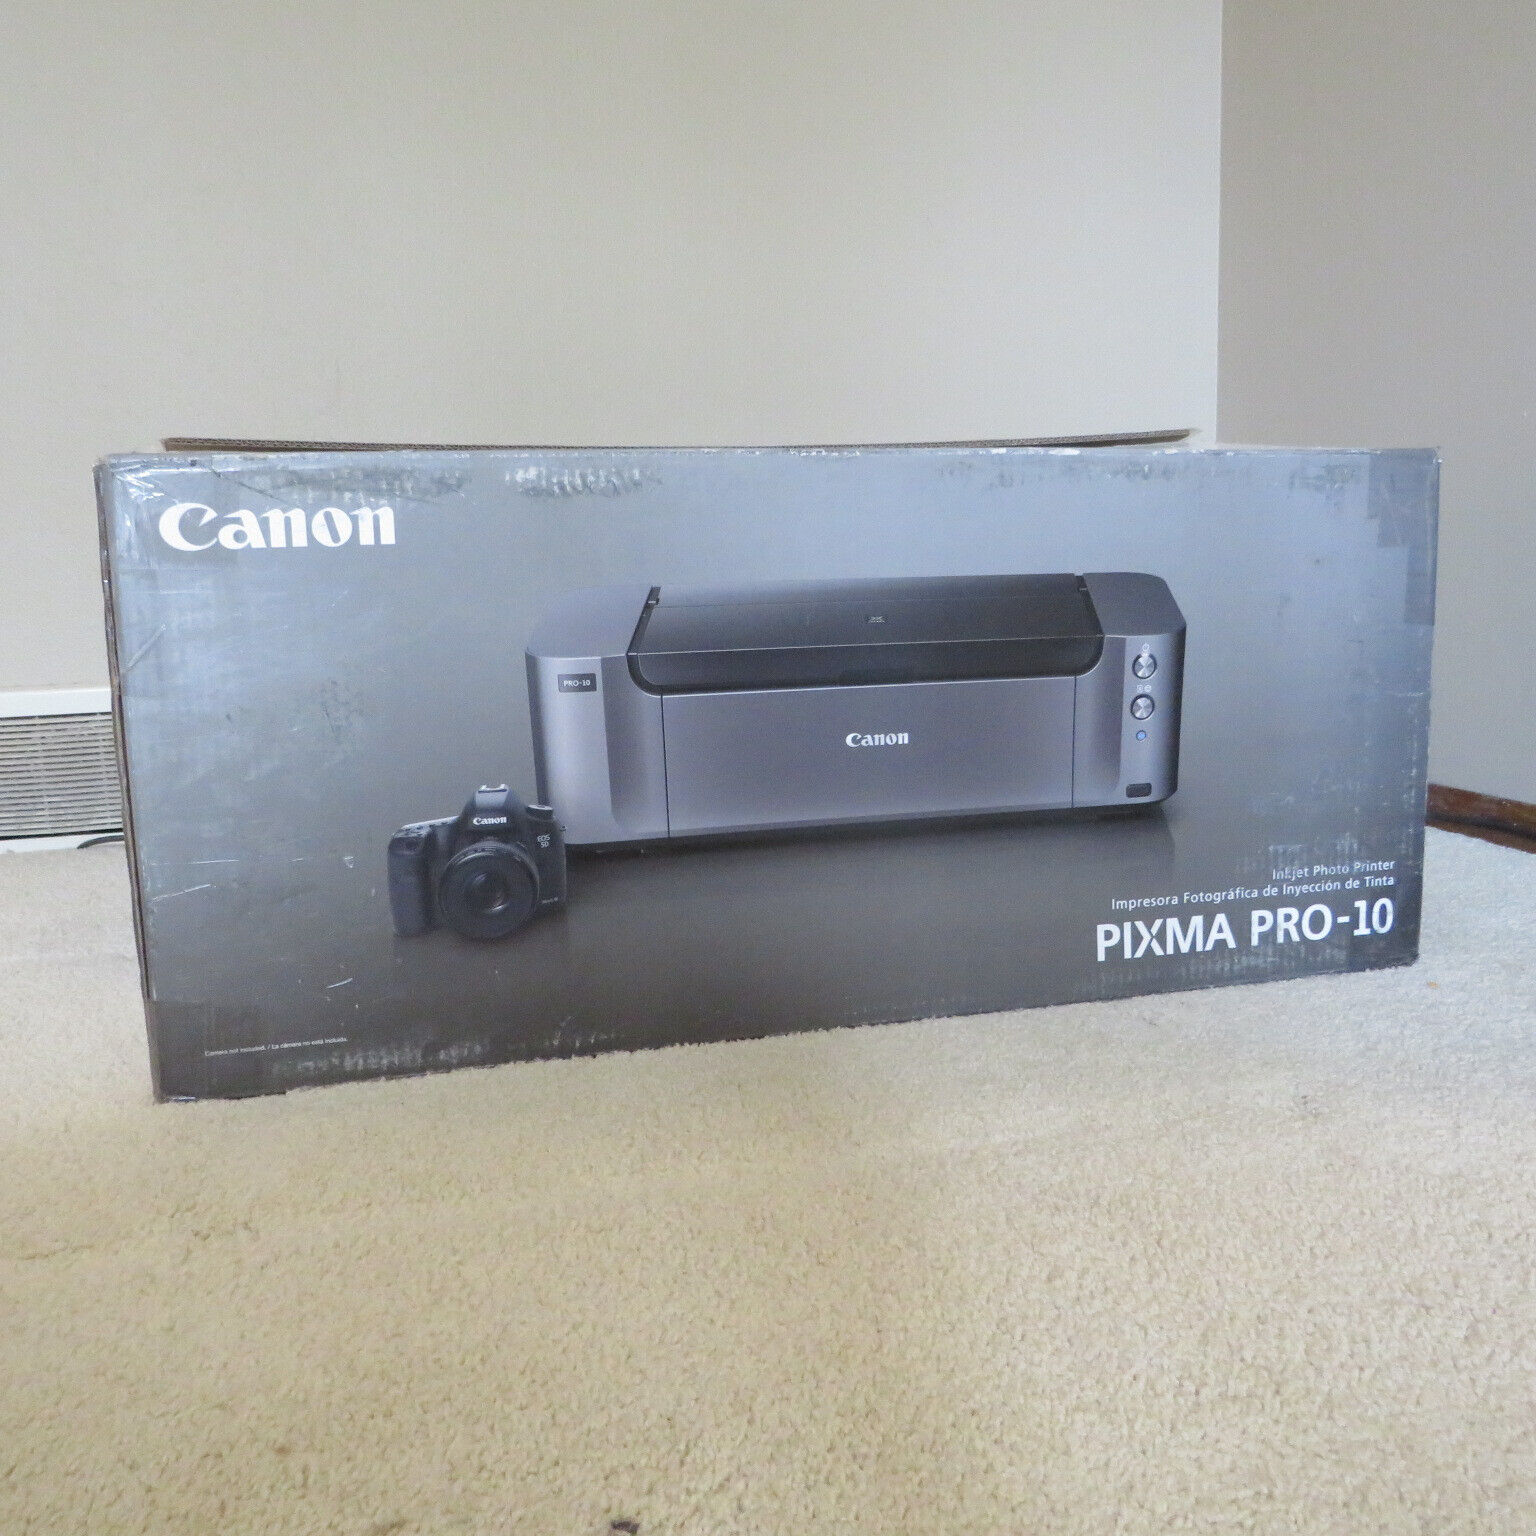 Canon PIXMA PRO-10 Digital Photo Inkjet Printer - Open Box - Everything Original